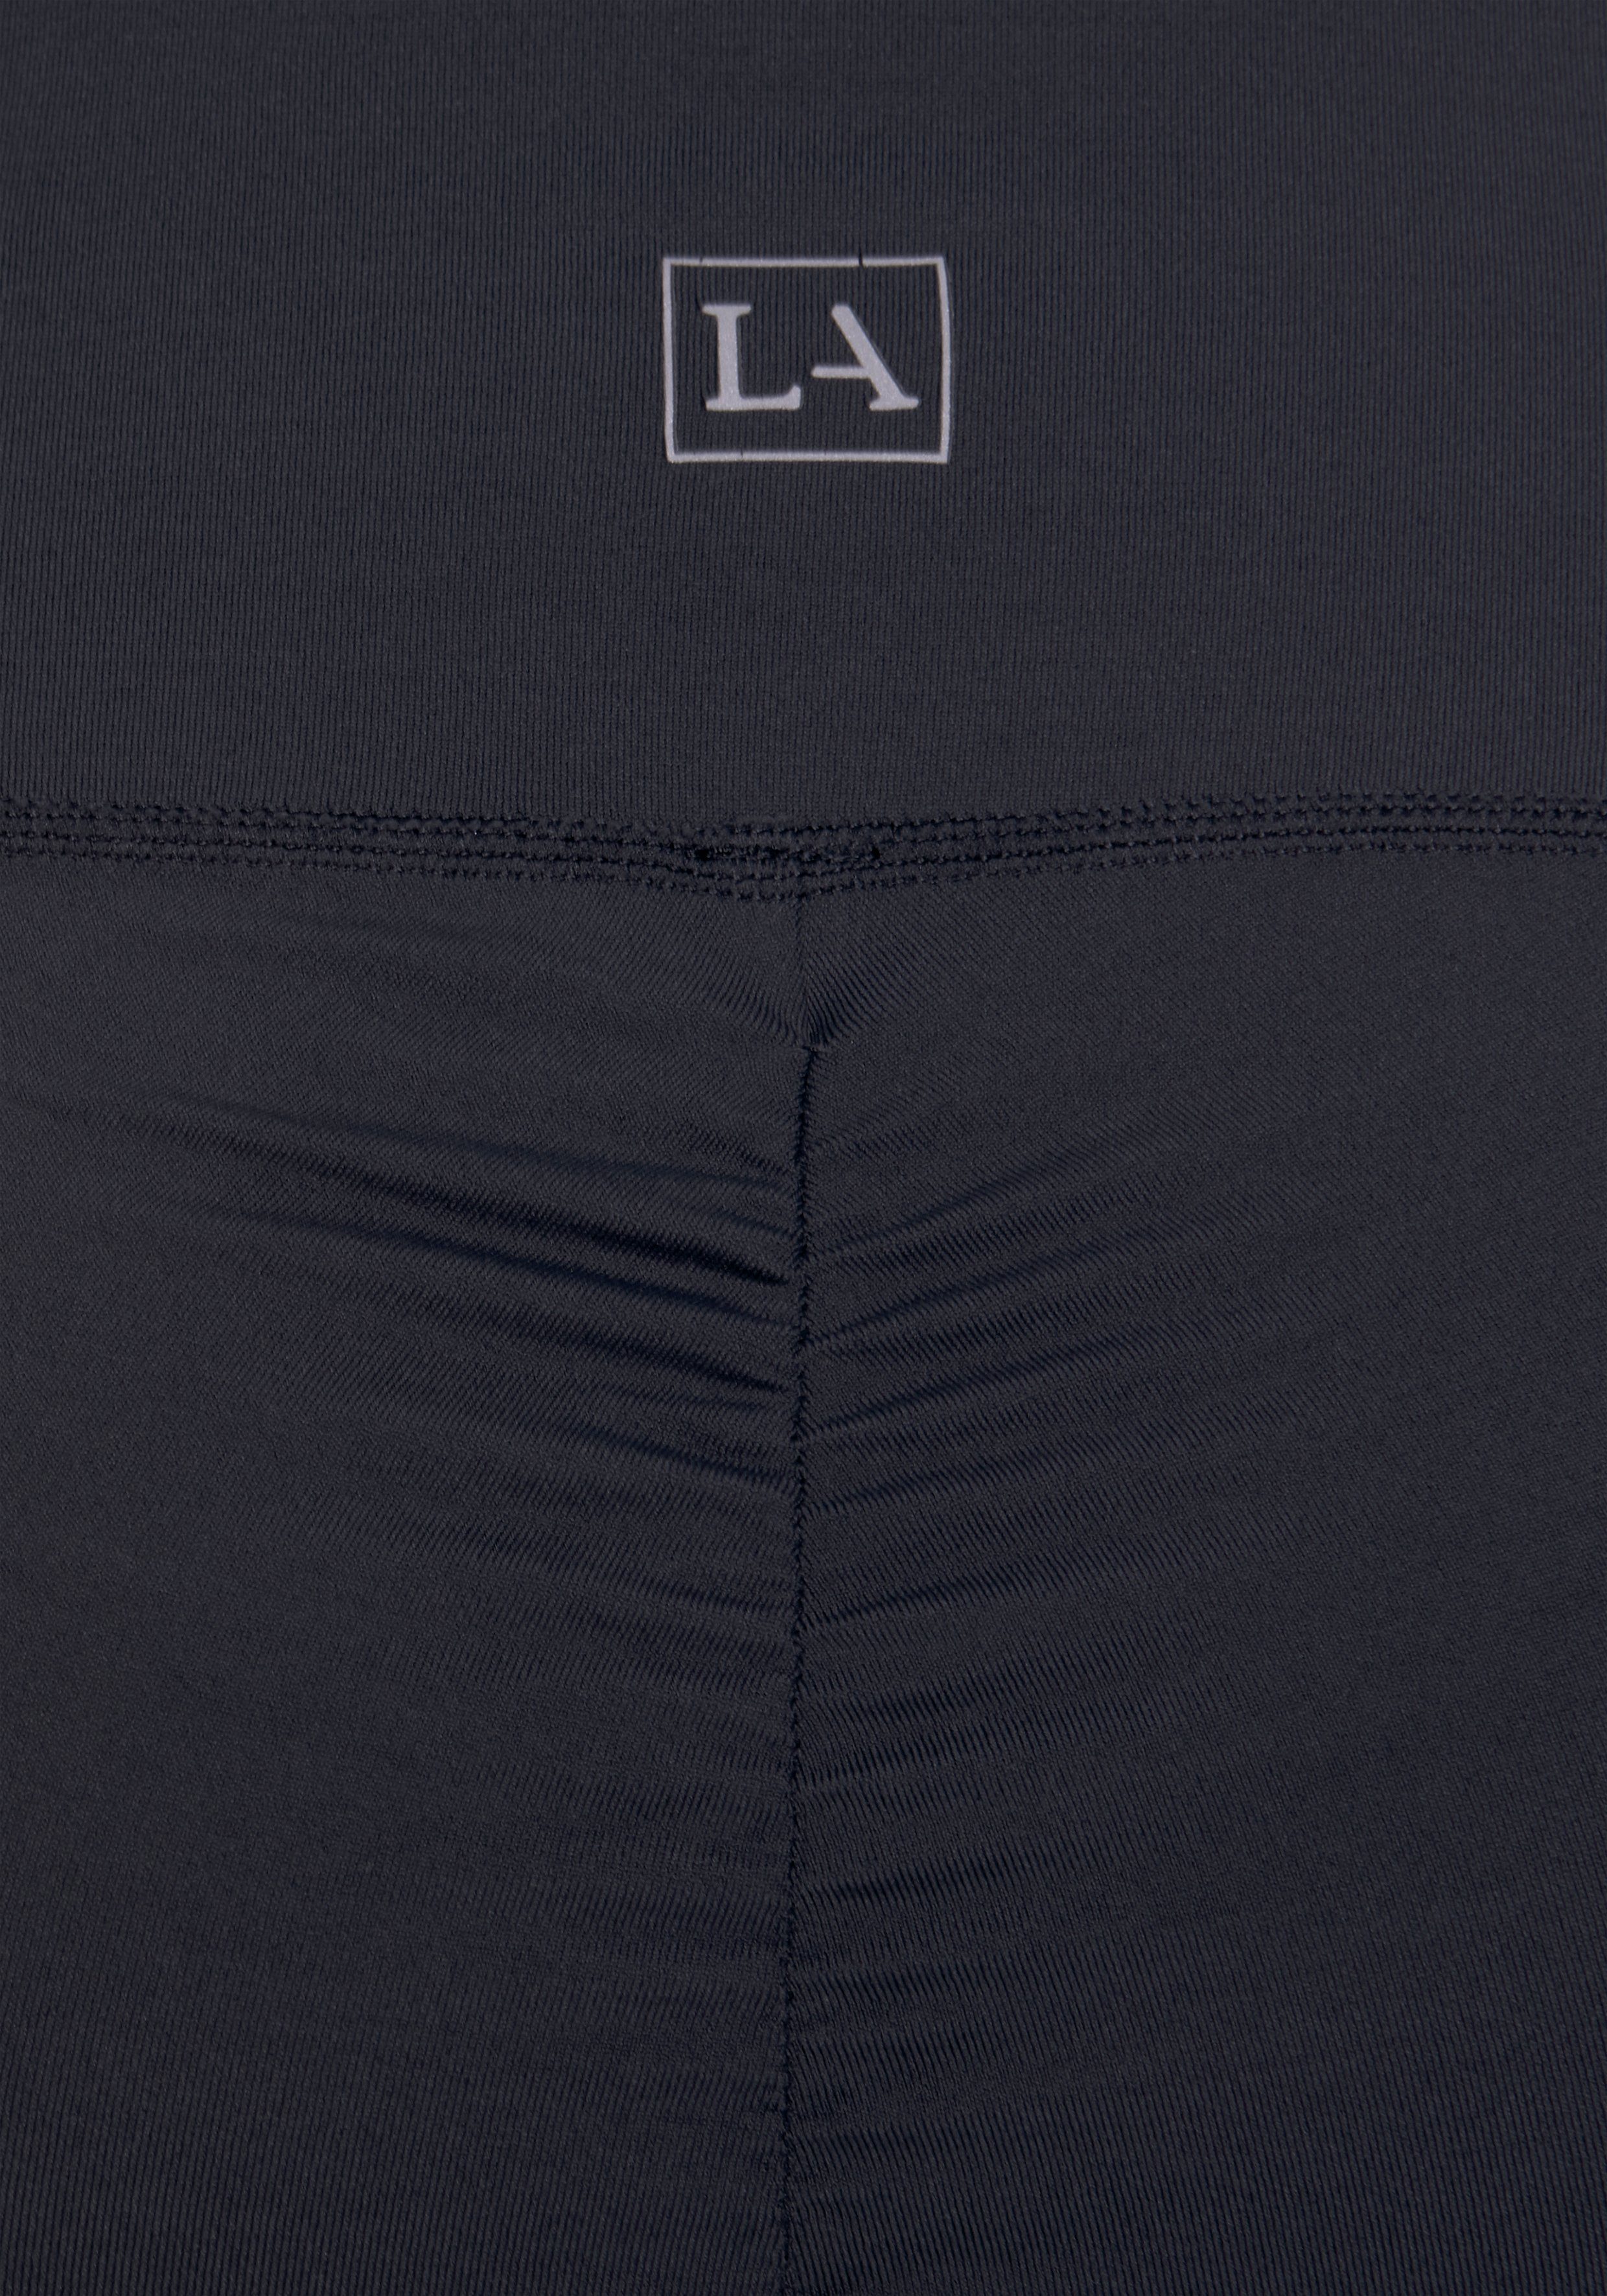 LASCANA ACTIVE Funktionsleggings -Sport schwarz kleiner Raffung, mit Loungewear Leggings